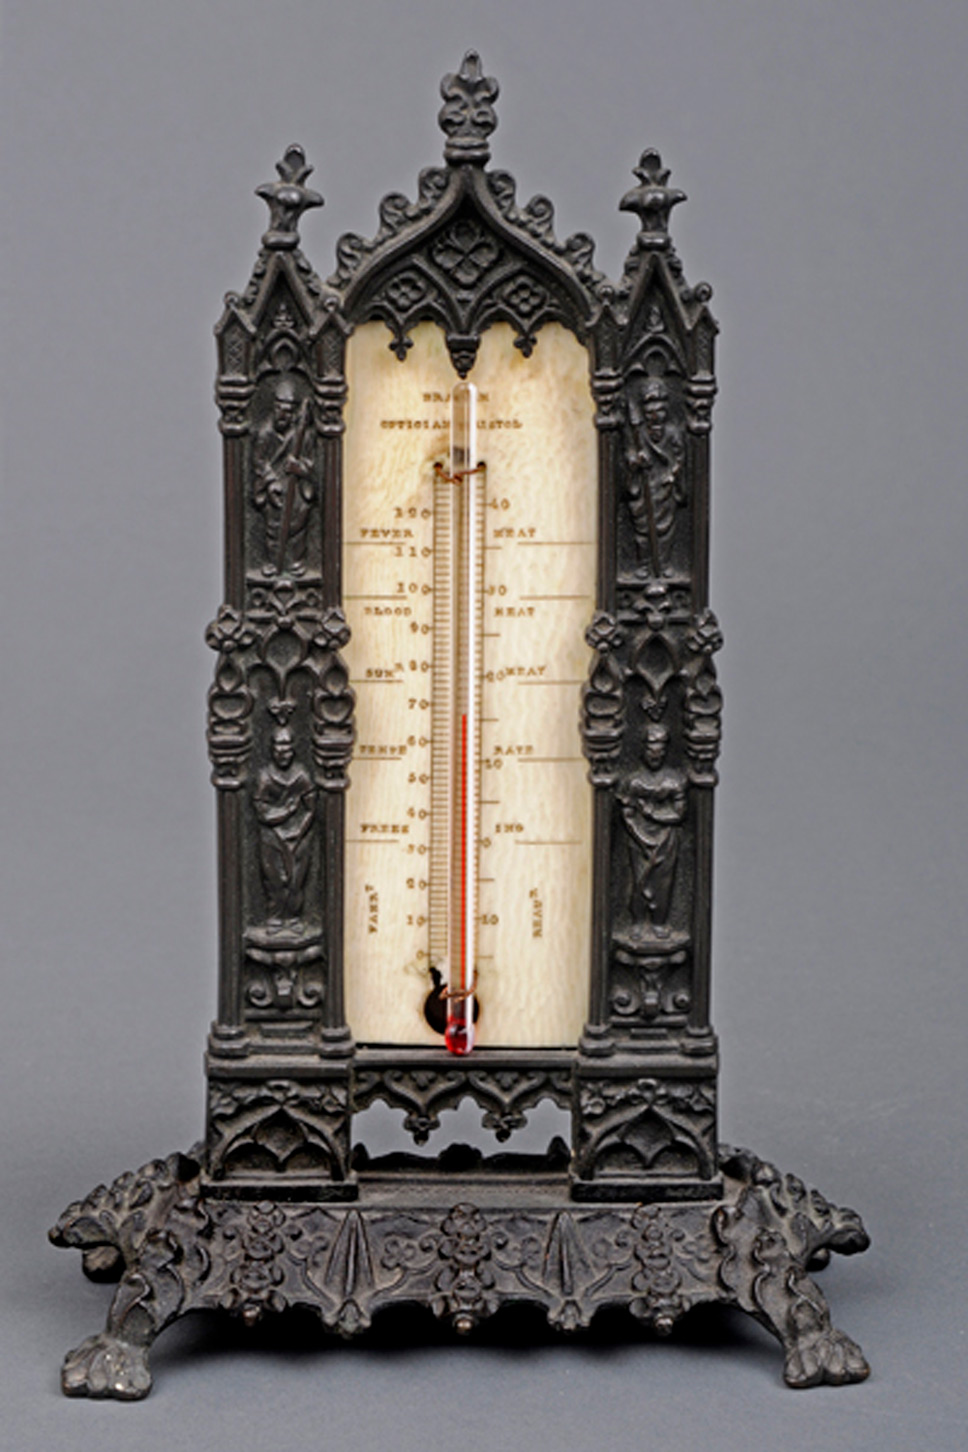 https://susansilverantiques.com/wp-content/uploads/bronze-desk-thermometer-circa-1828-susan-silver-antiques-main-3823A.jpg